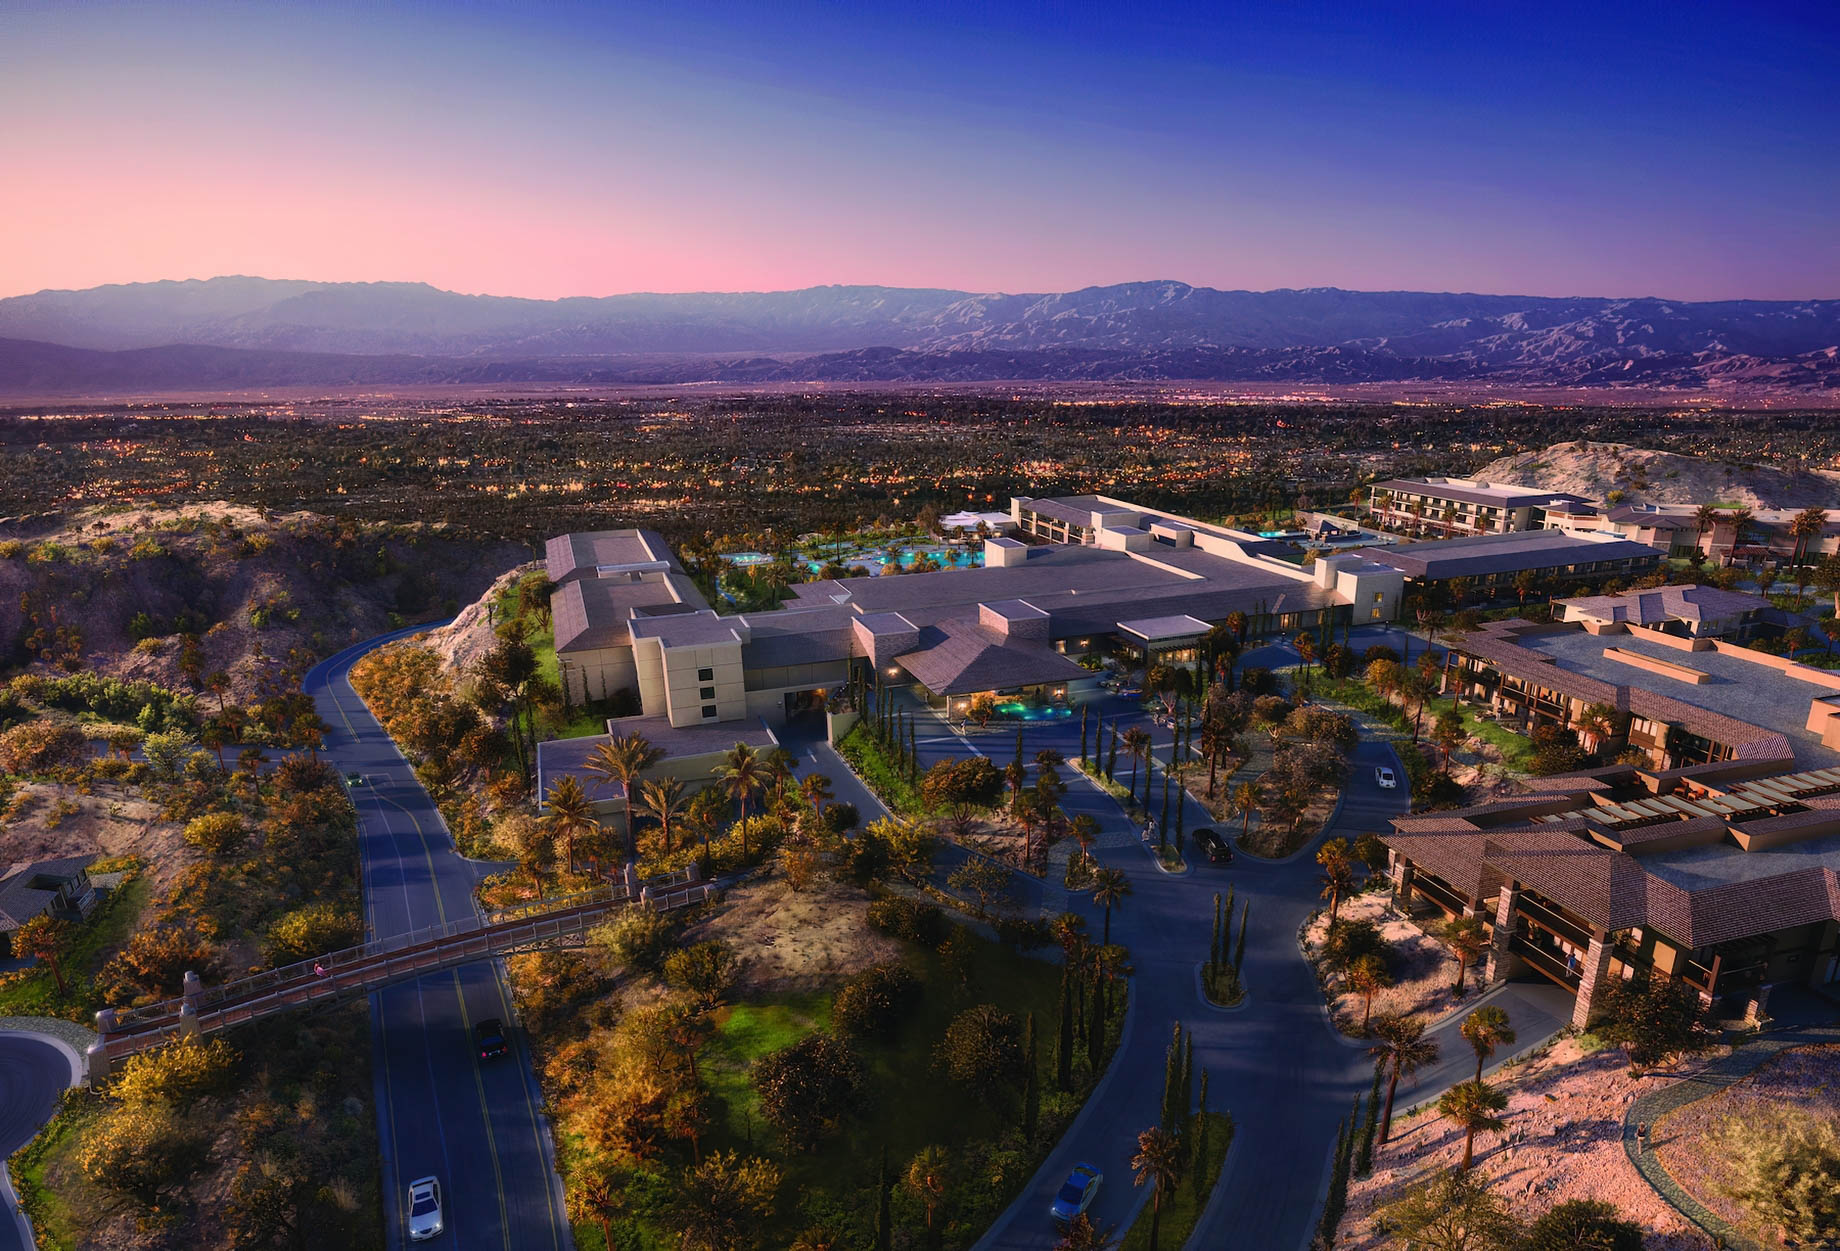 The Ritz-Carlton, Rancho Mirage Resort - Rancho Mirage, CA, USA - Hotel Exterior Aerial View Sunset